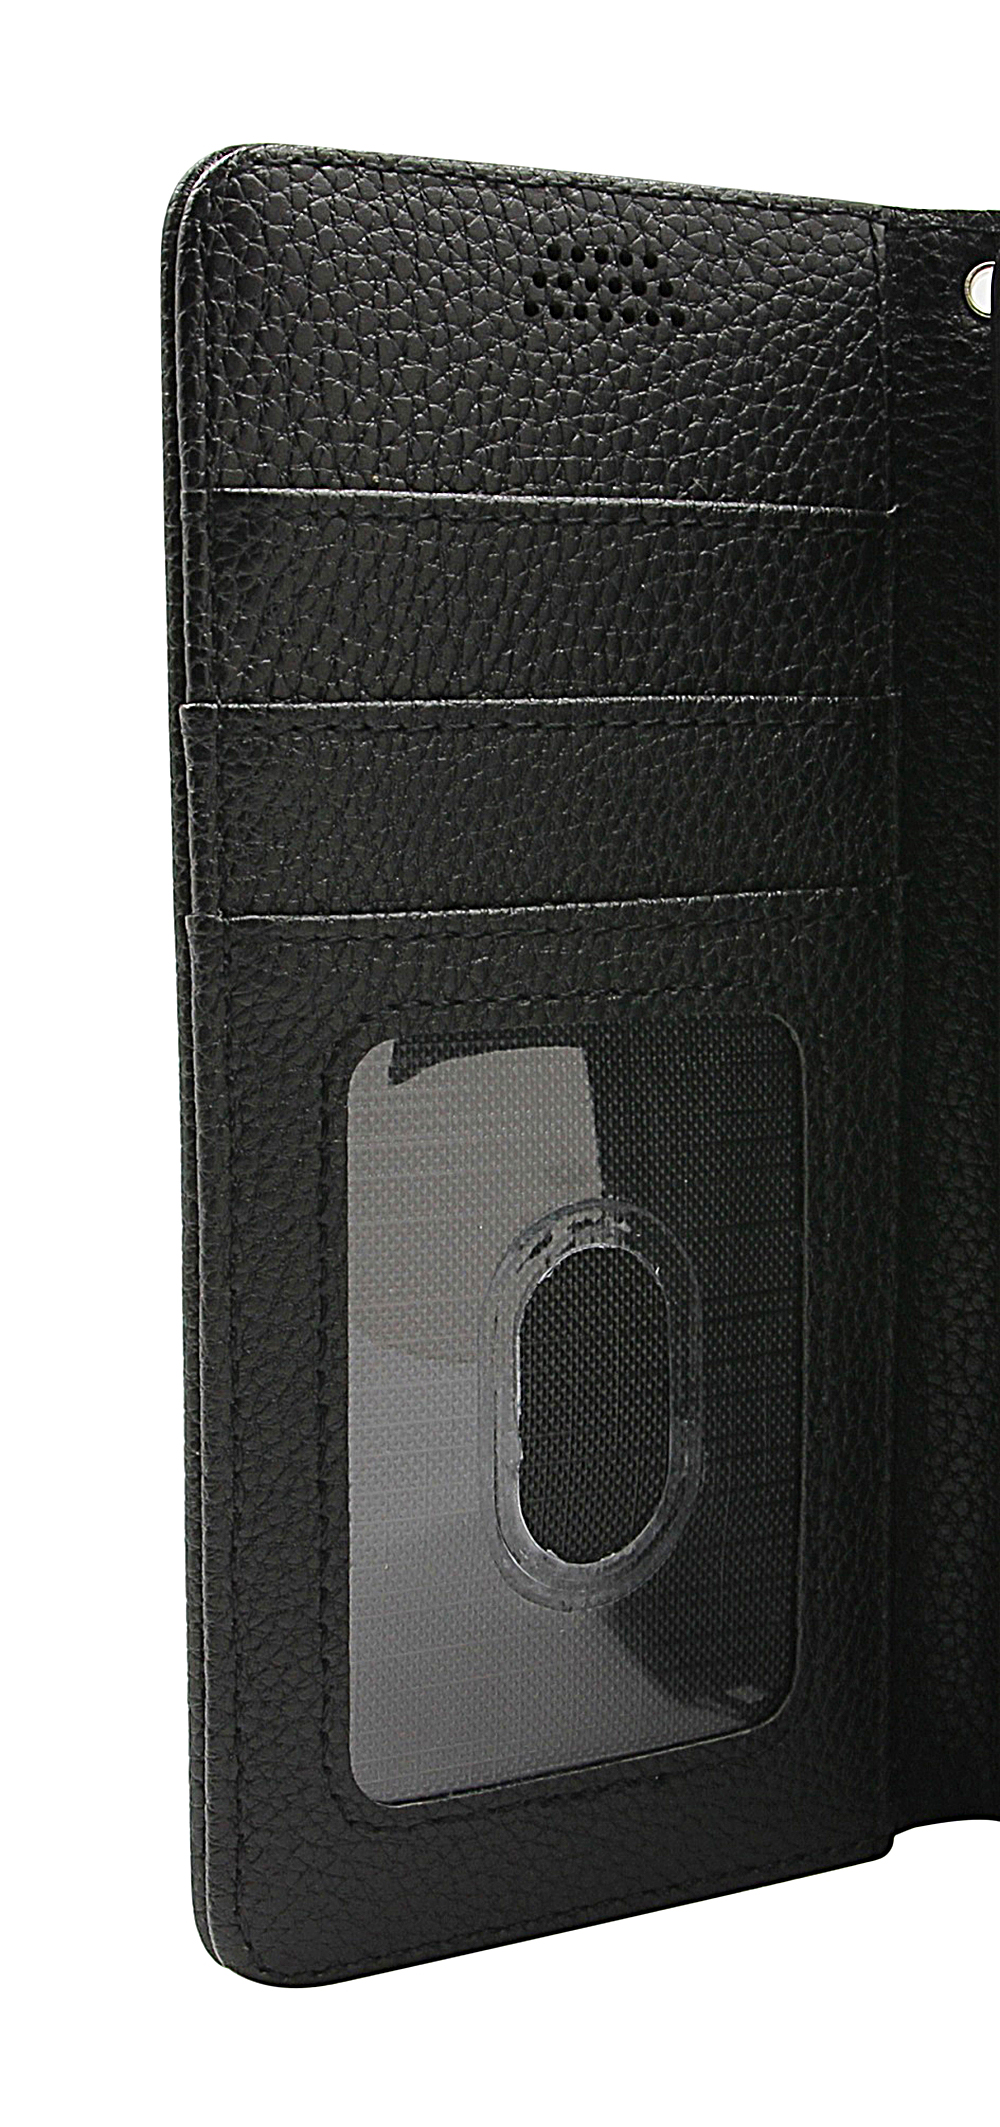 New Standcase Wallet Samsung Galaxy S21 FE 5G (SM-G990B)